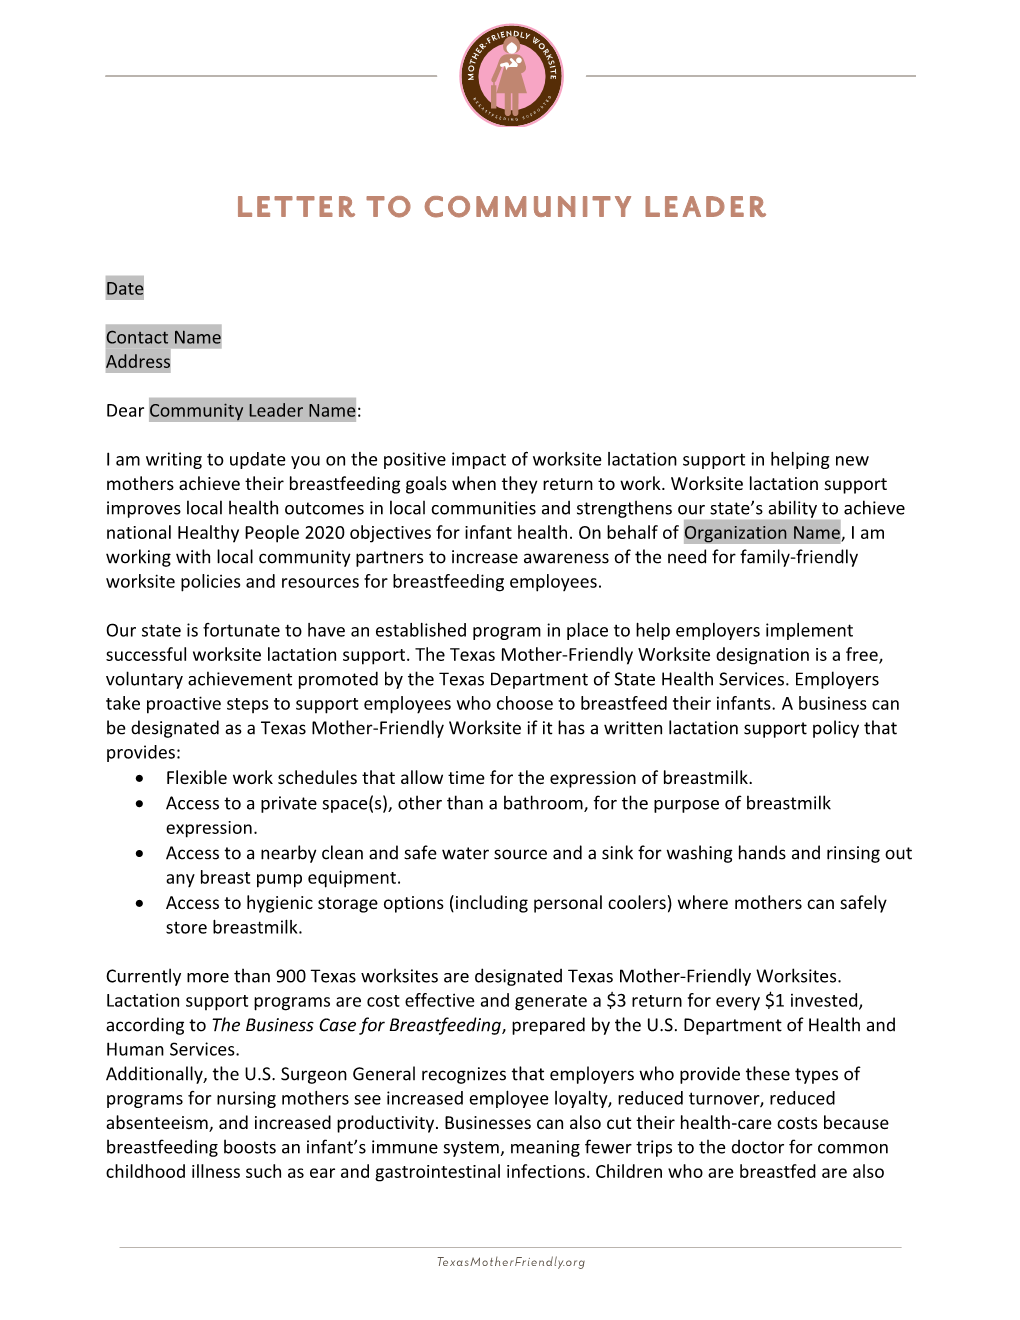 Dear Community Leader Name